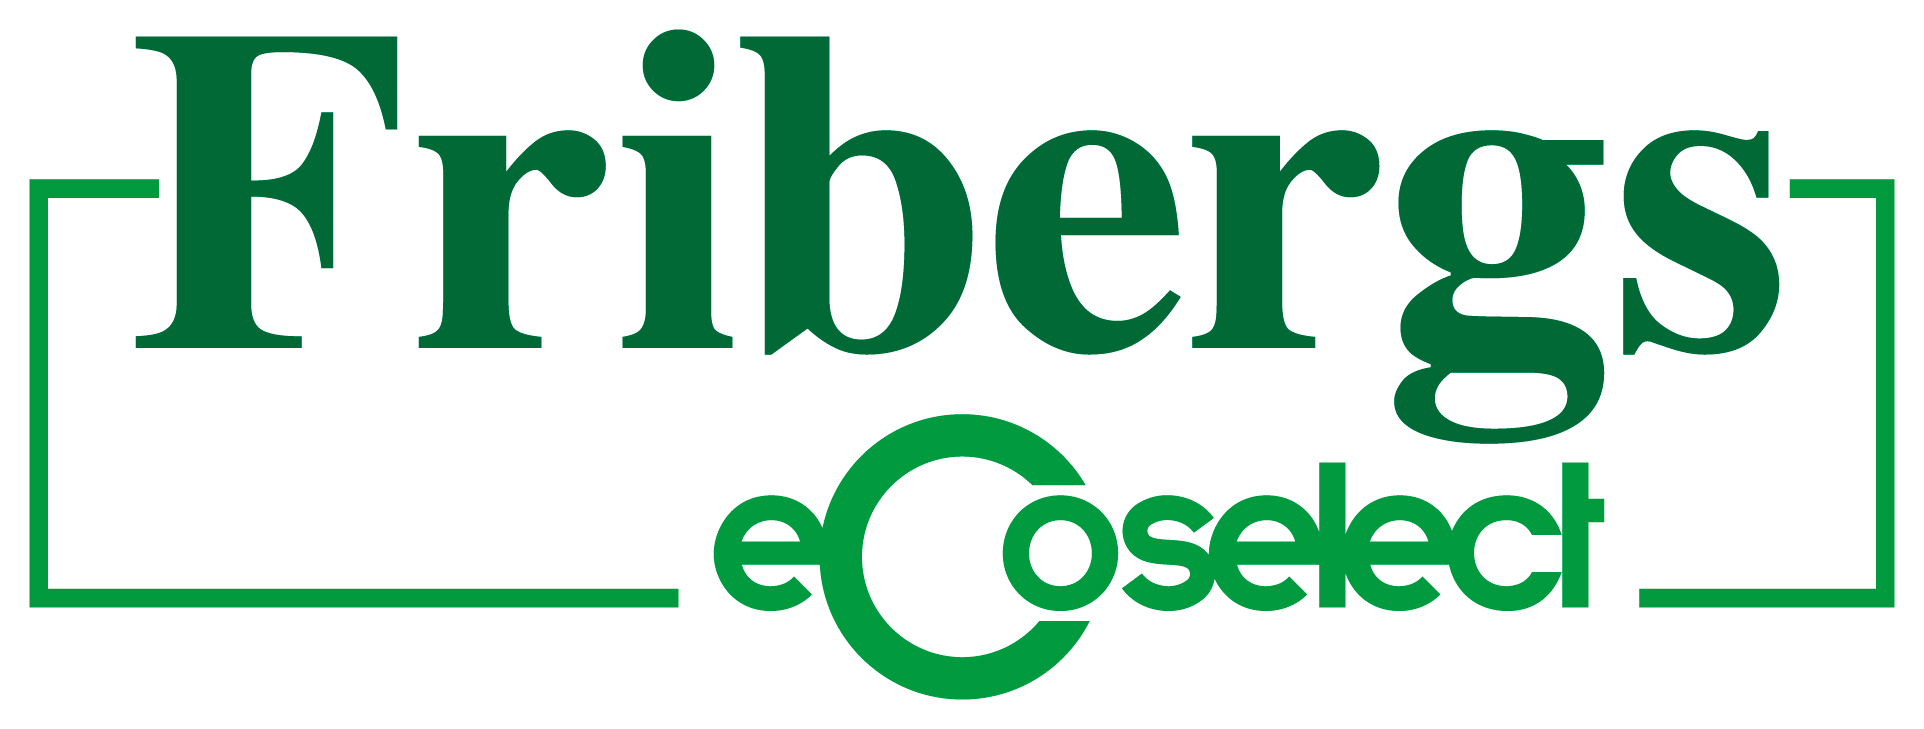 Fribergs Ecoselect